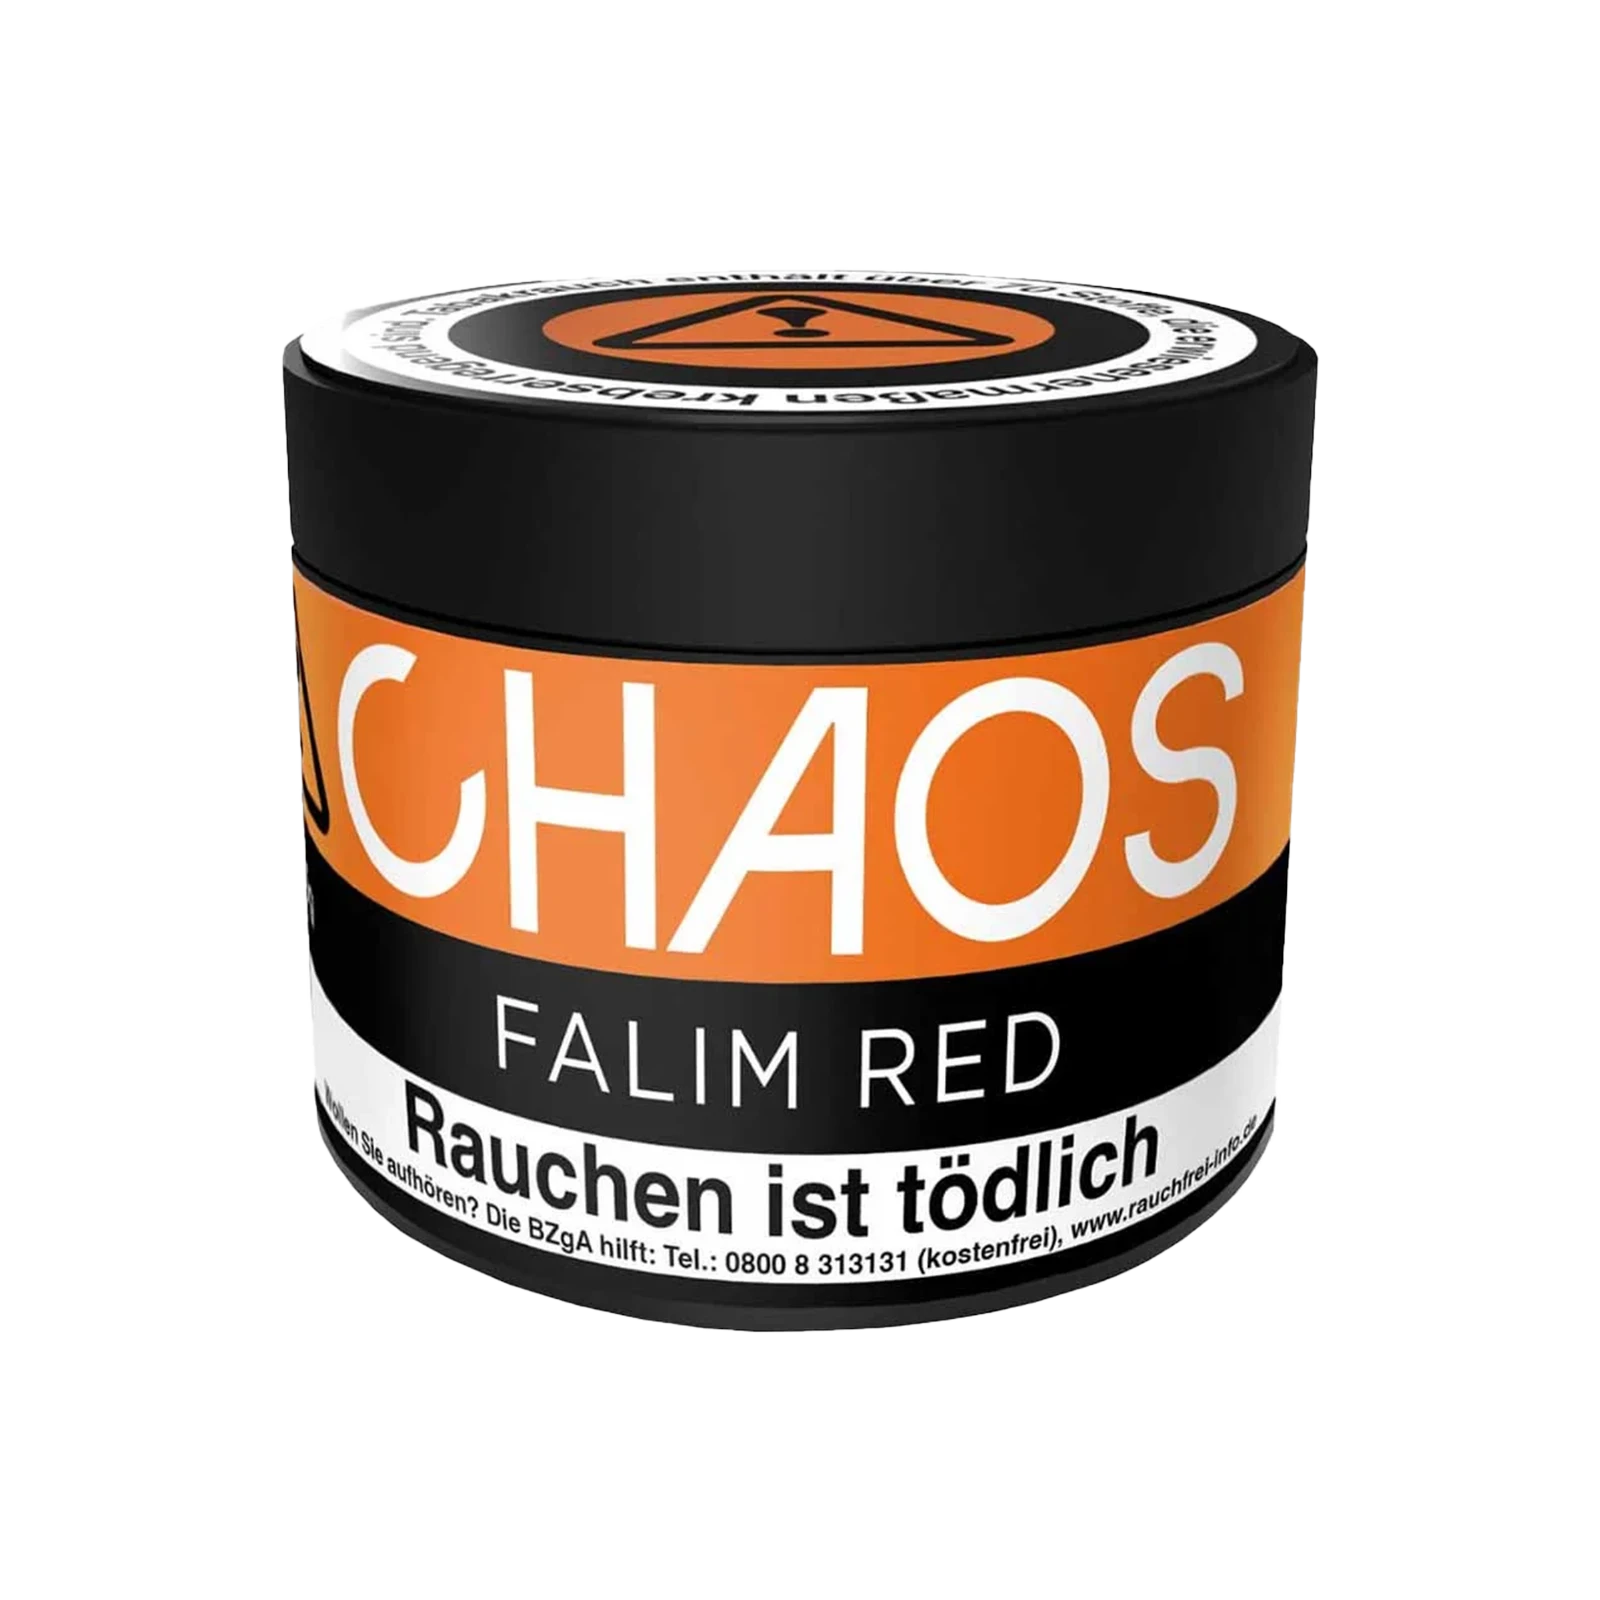 Chaos Dry Base mit Aroma "Falim Red" 65g | Pfeifentabak günstig kaufen1